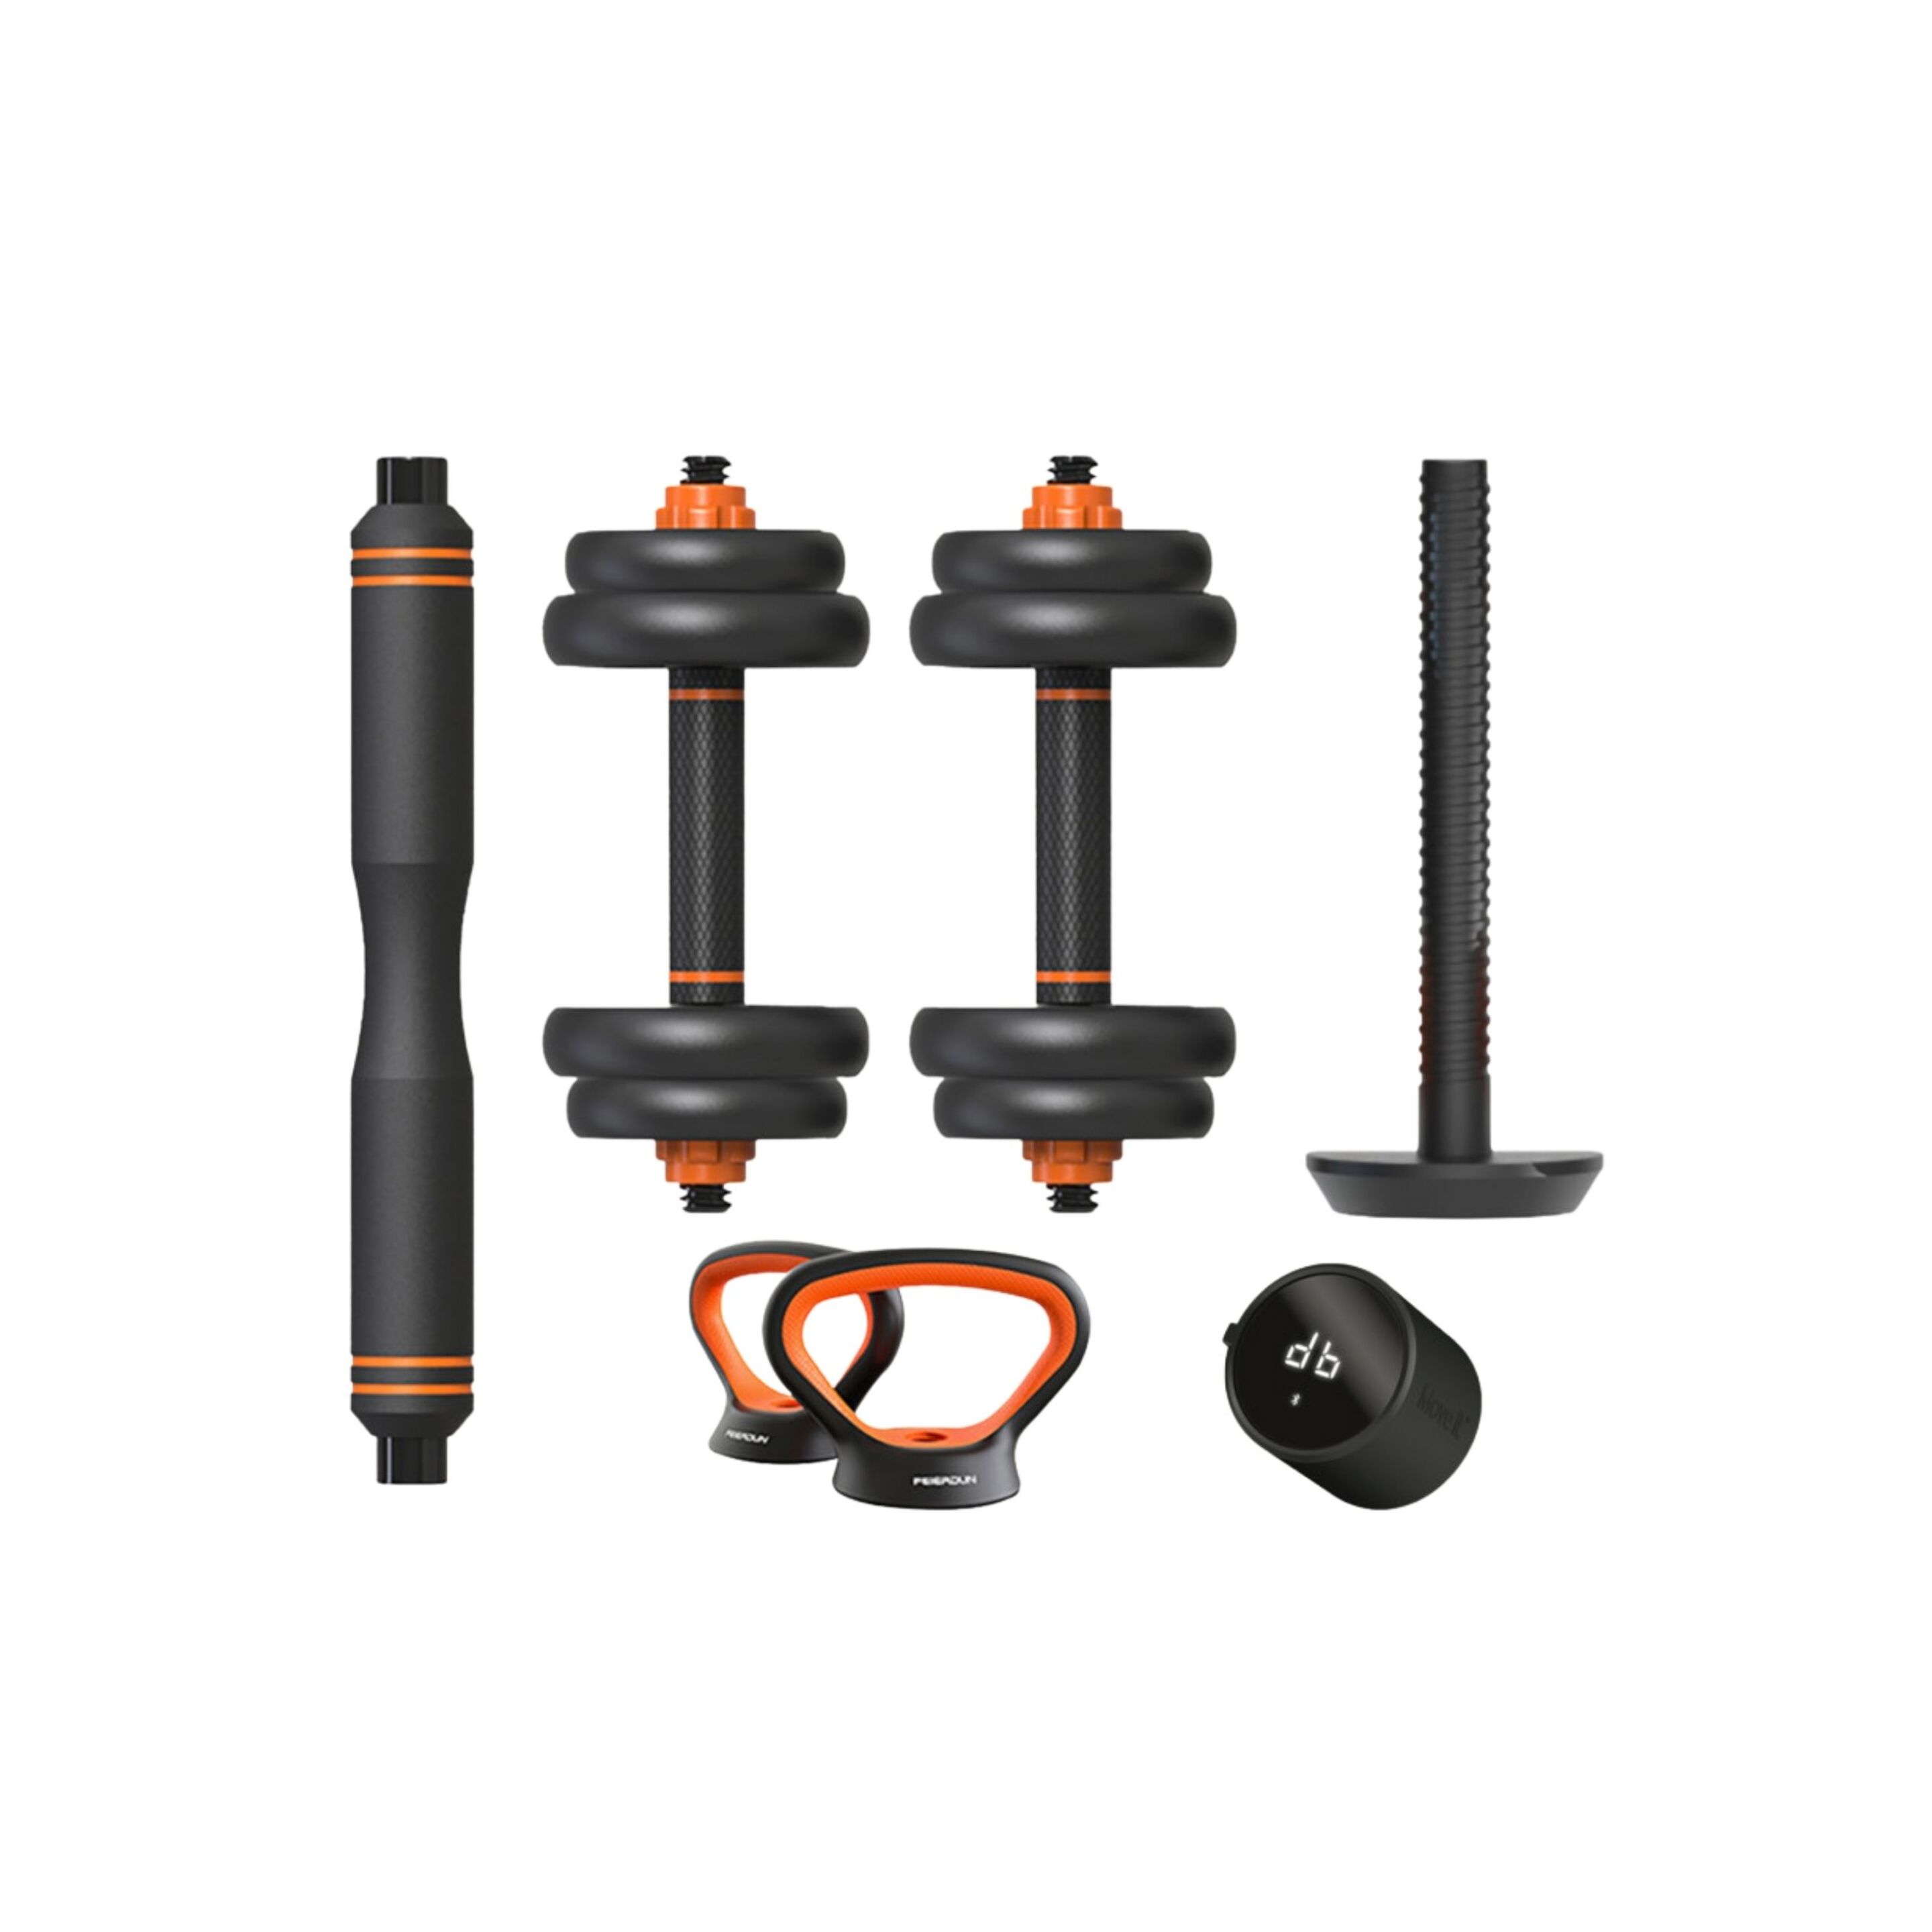 Pack Halteres Smart Kit Com Kettlebel Xiaomi Fed 10 Kgs E Sensor Smart - Preto | Sport Zone MKP